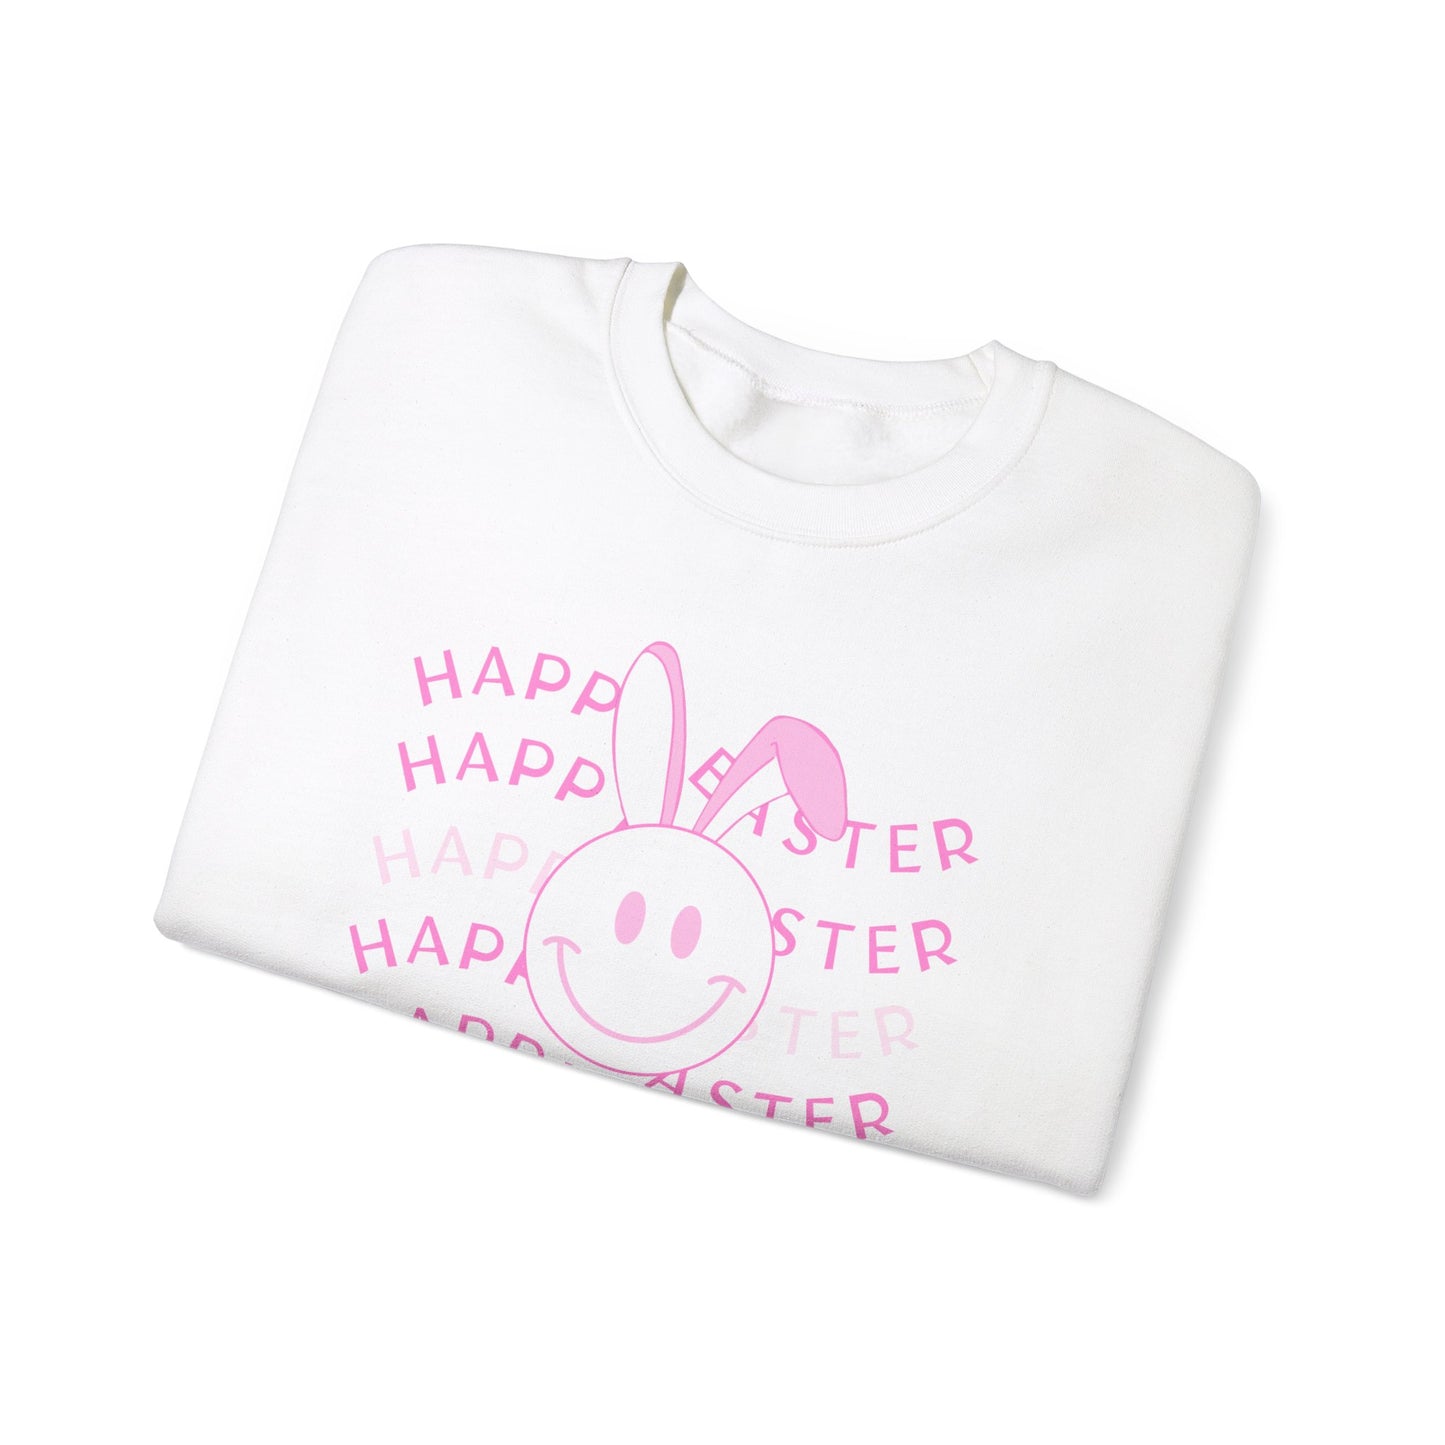 HAPPY EASTER round neck sweatshirt tones on Easter pink tones - adult